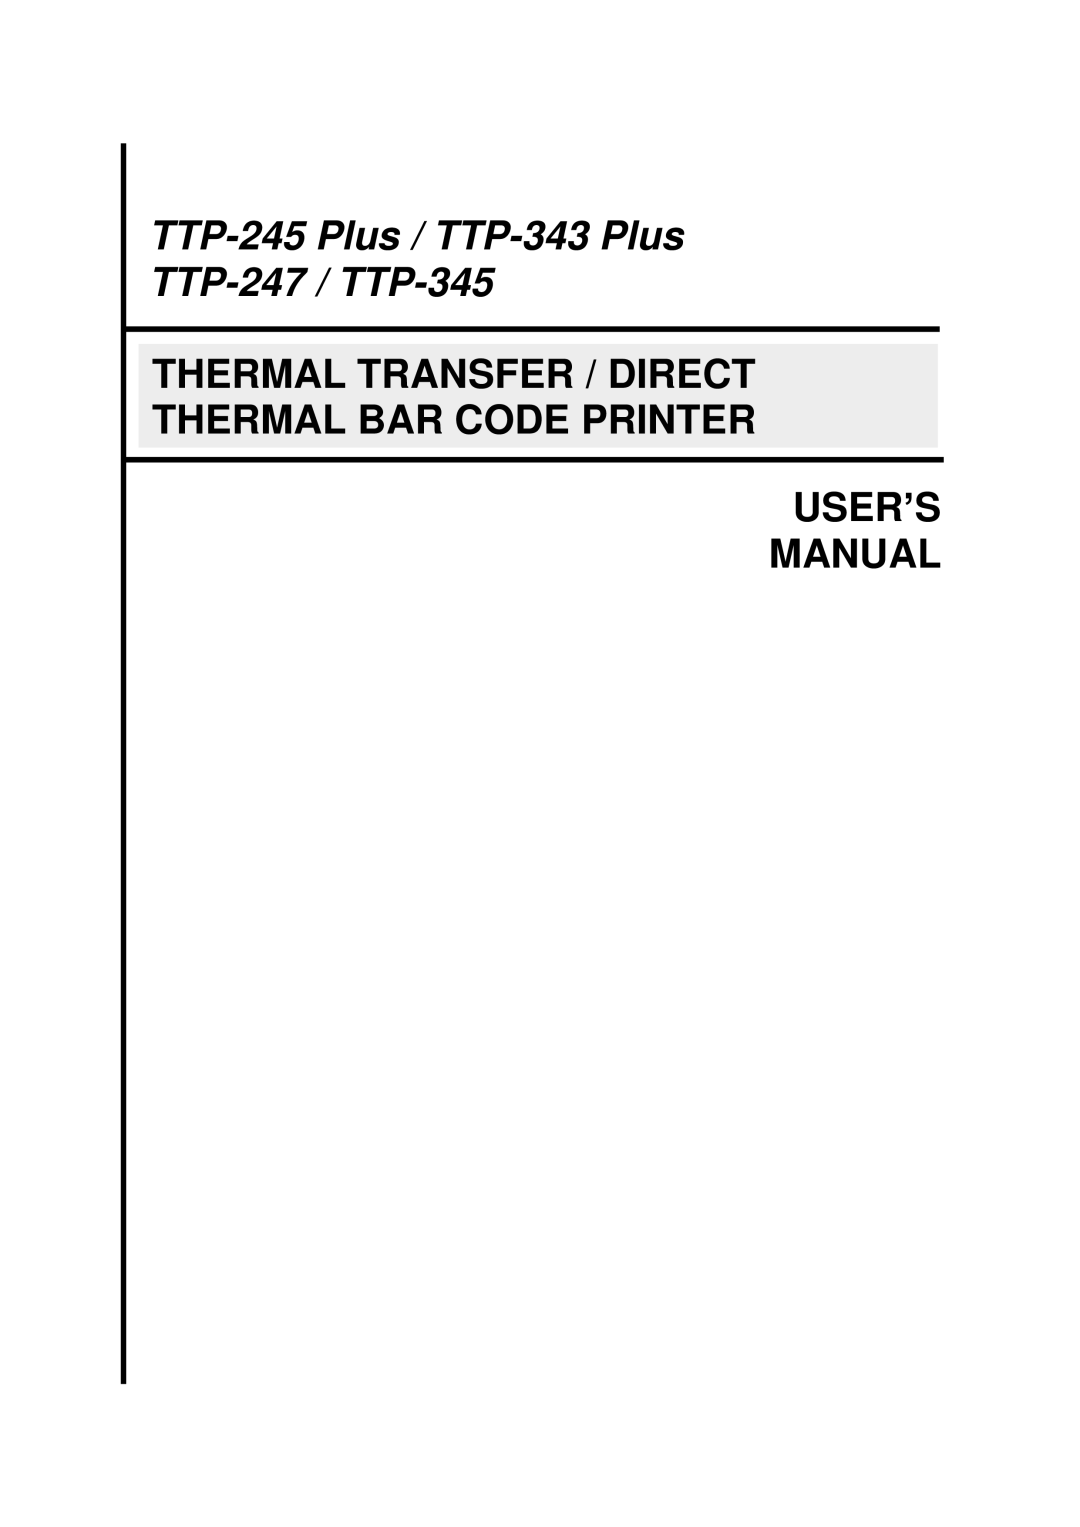 The Speaker Company user manual TTP-245 Plus / TTP-343 Plus TTP-247 / TTP-345 